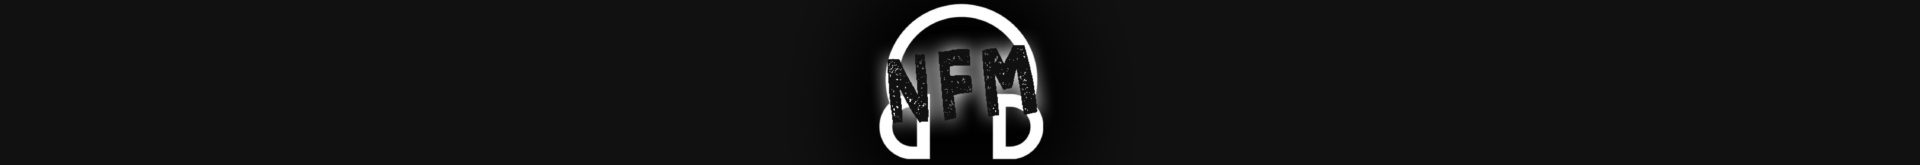 Nasty FM - La Radio